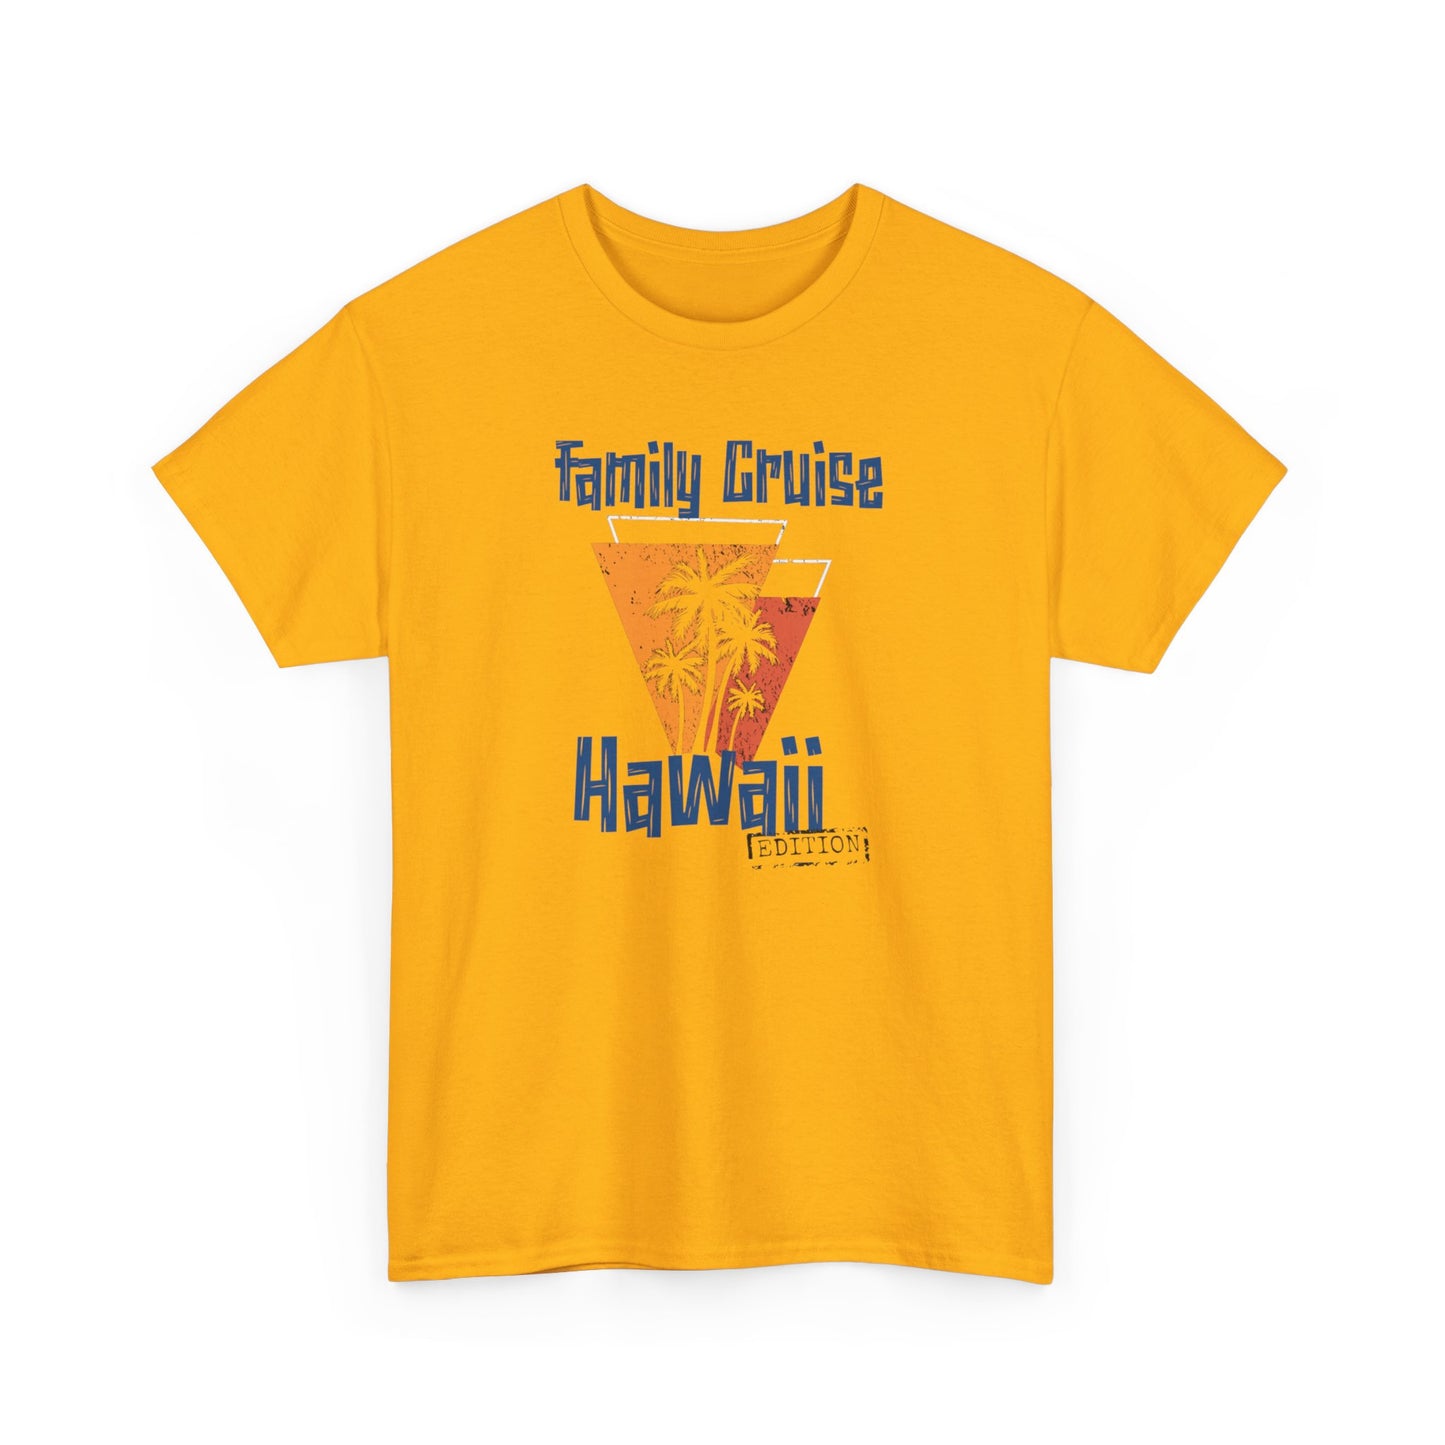 "Family Cruise Hawaii Edition" T-Shirt – Celebrate Your Hawaiian Adventure